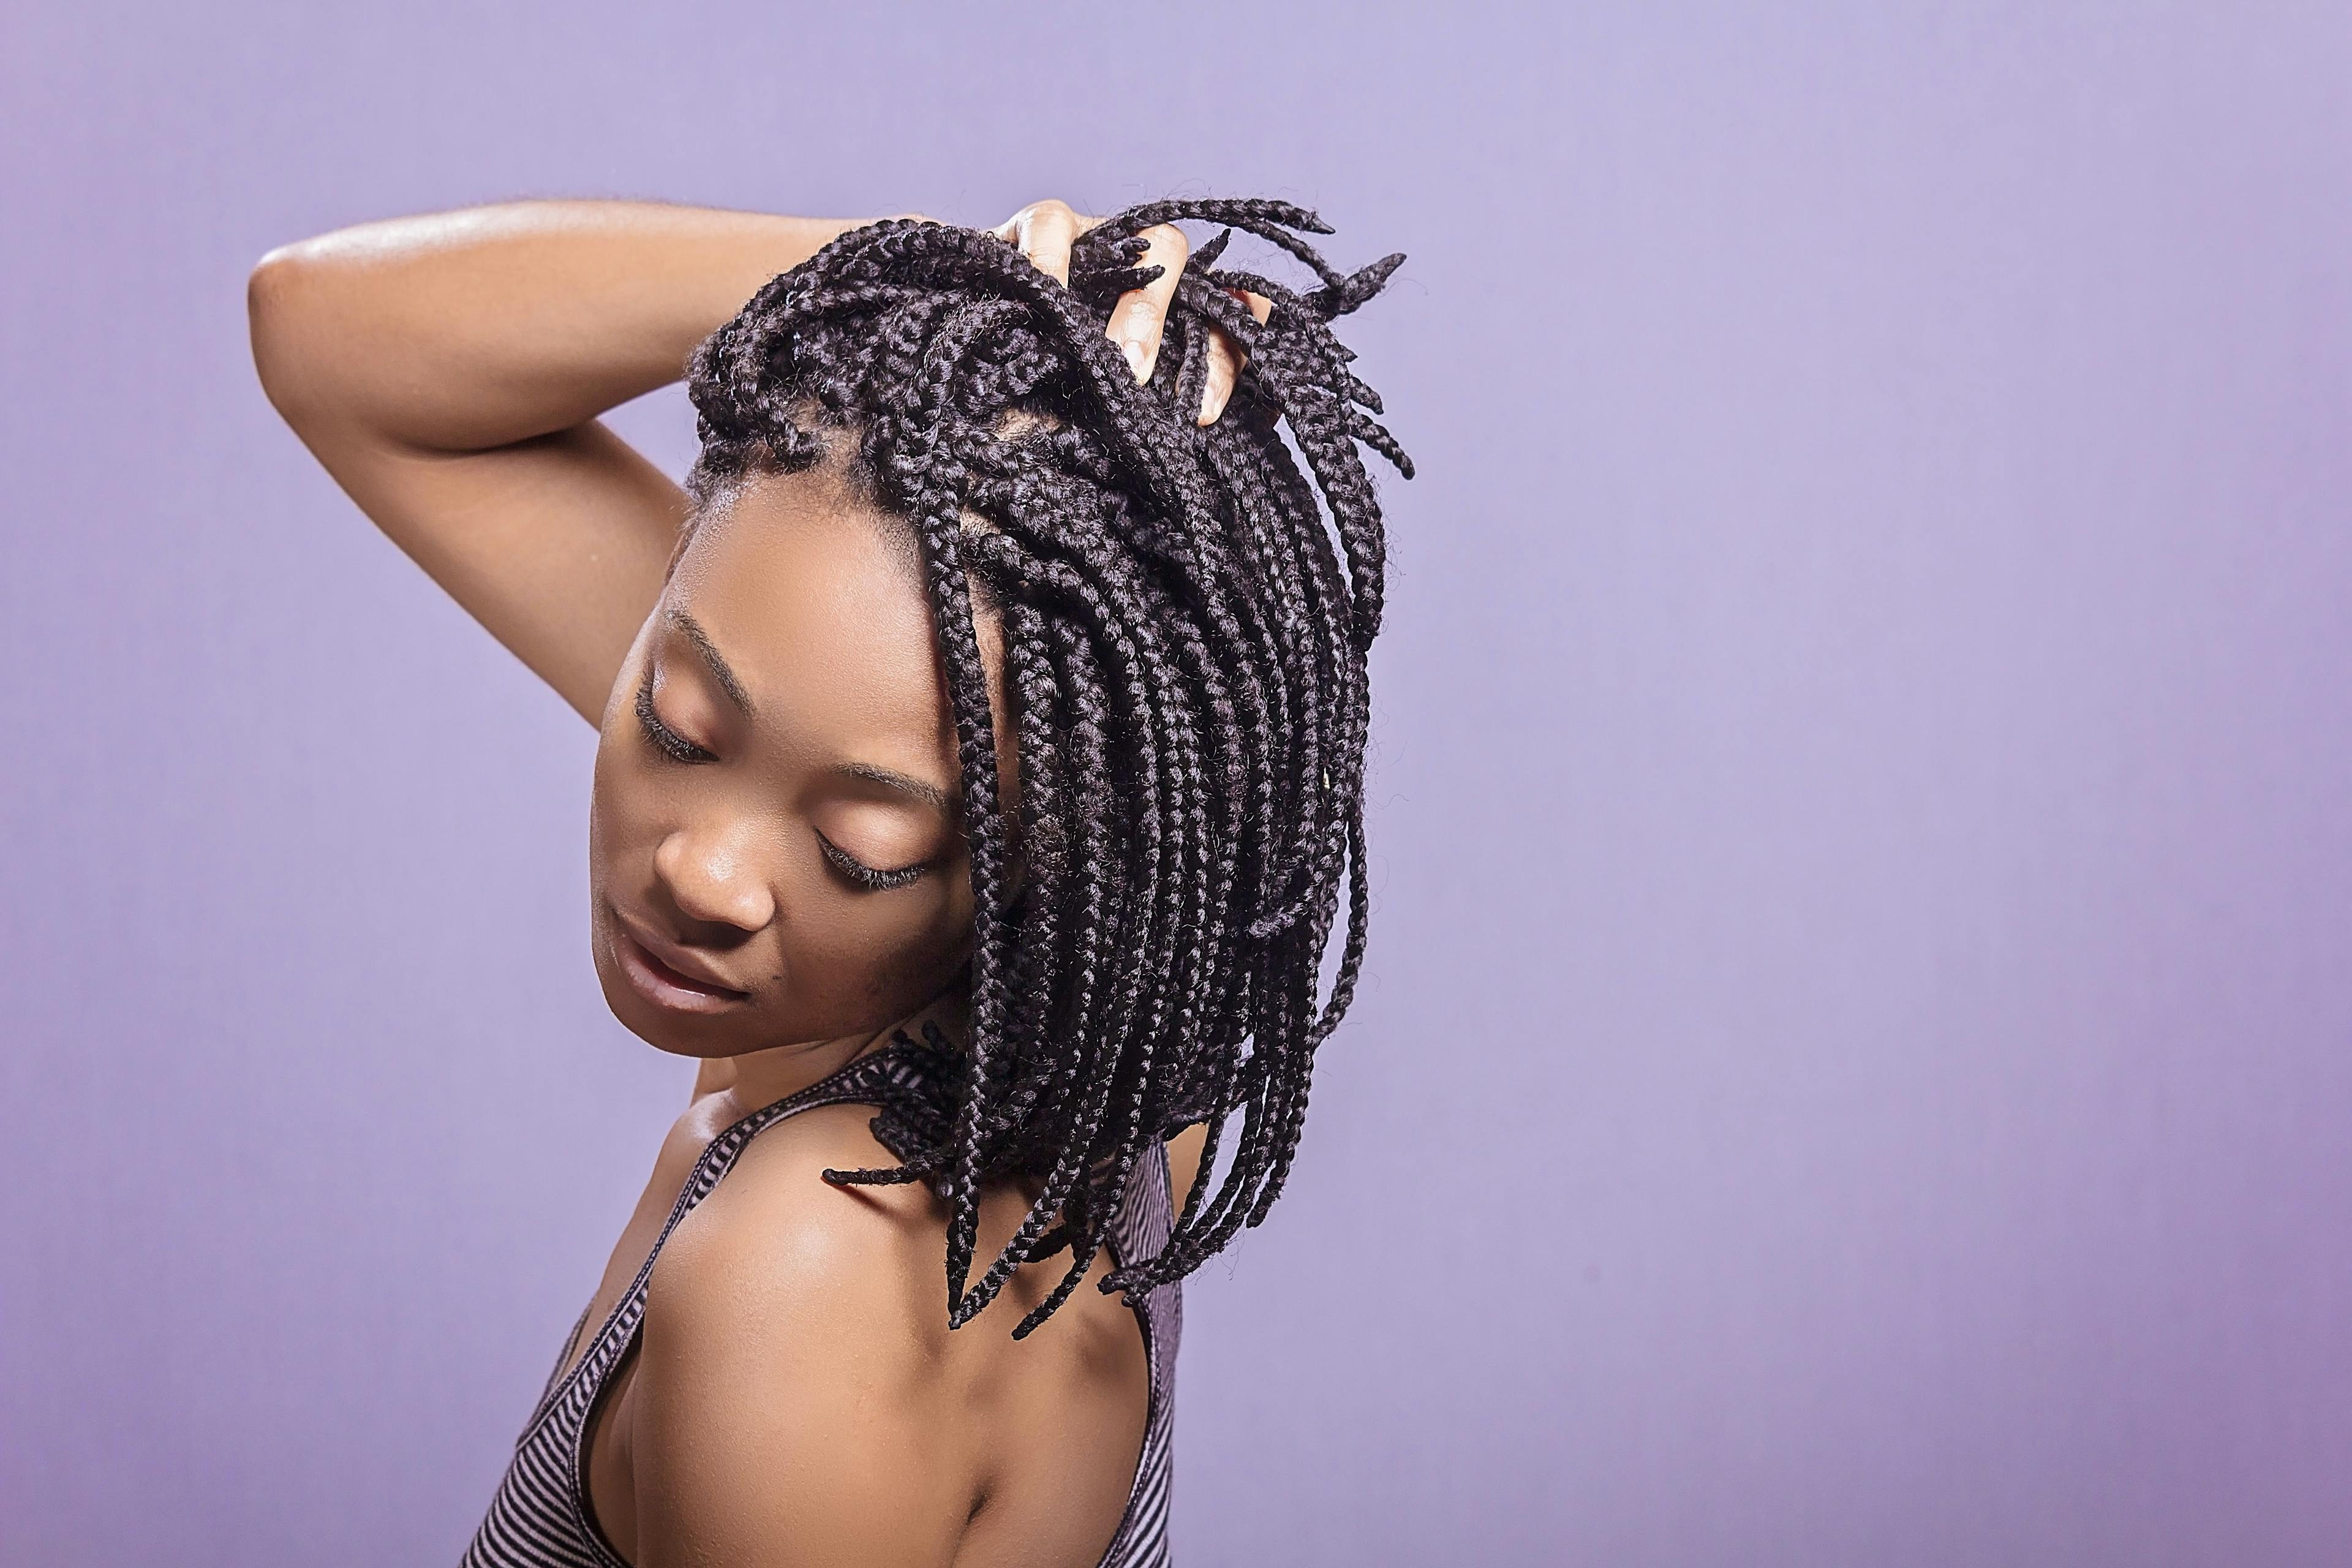 A black woman with braided hair